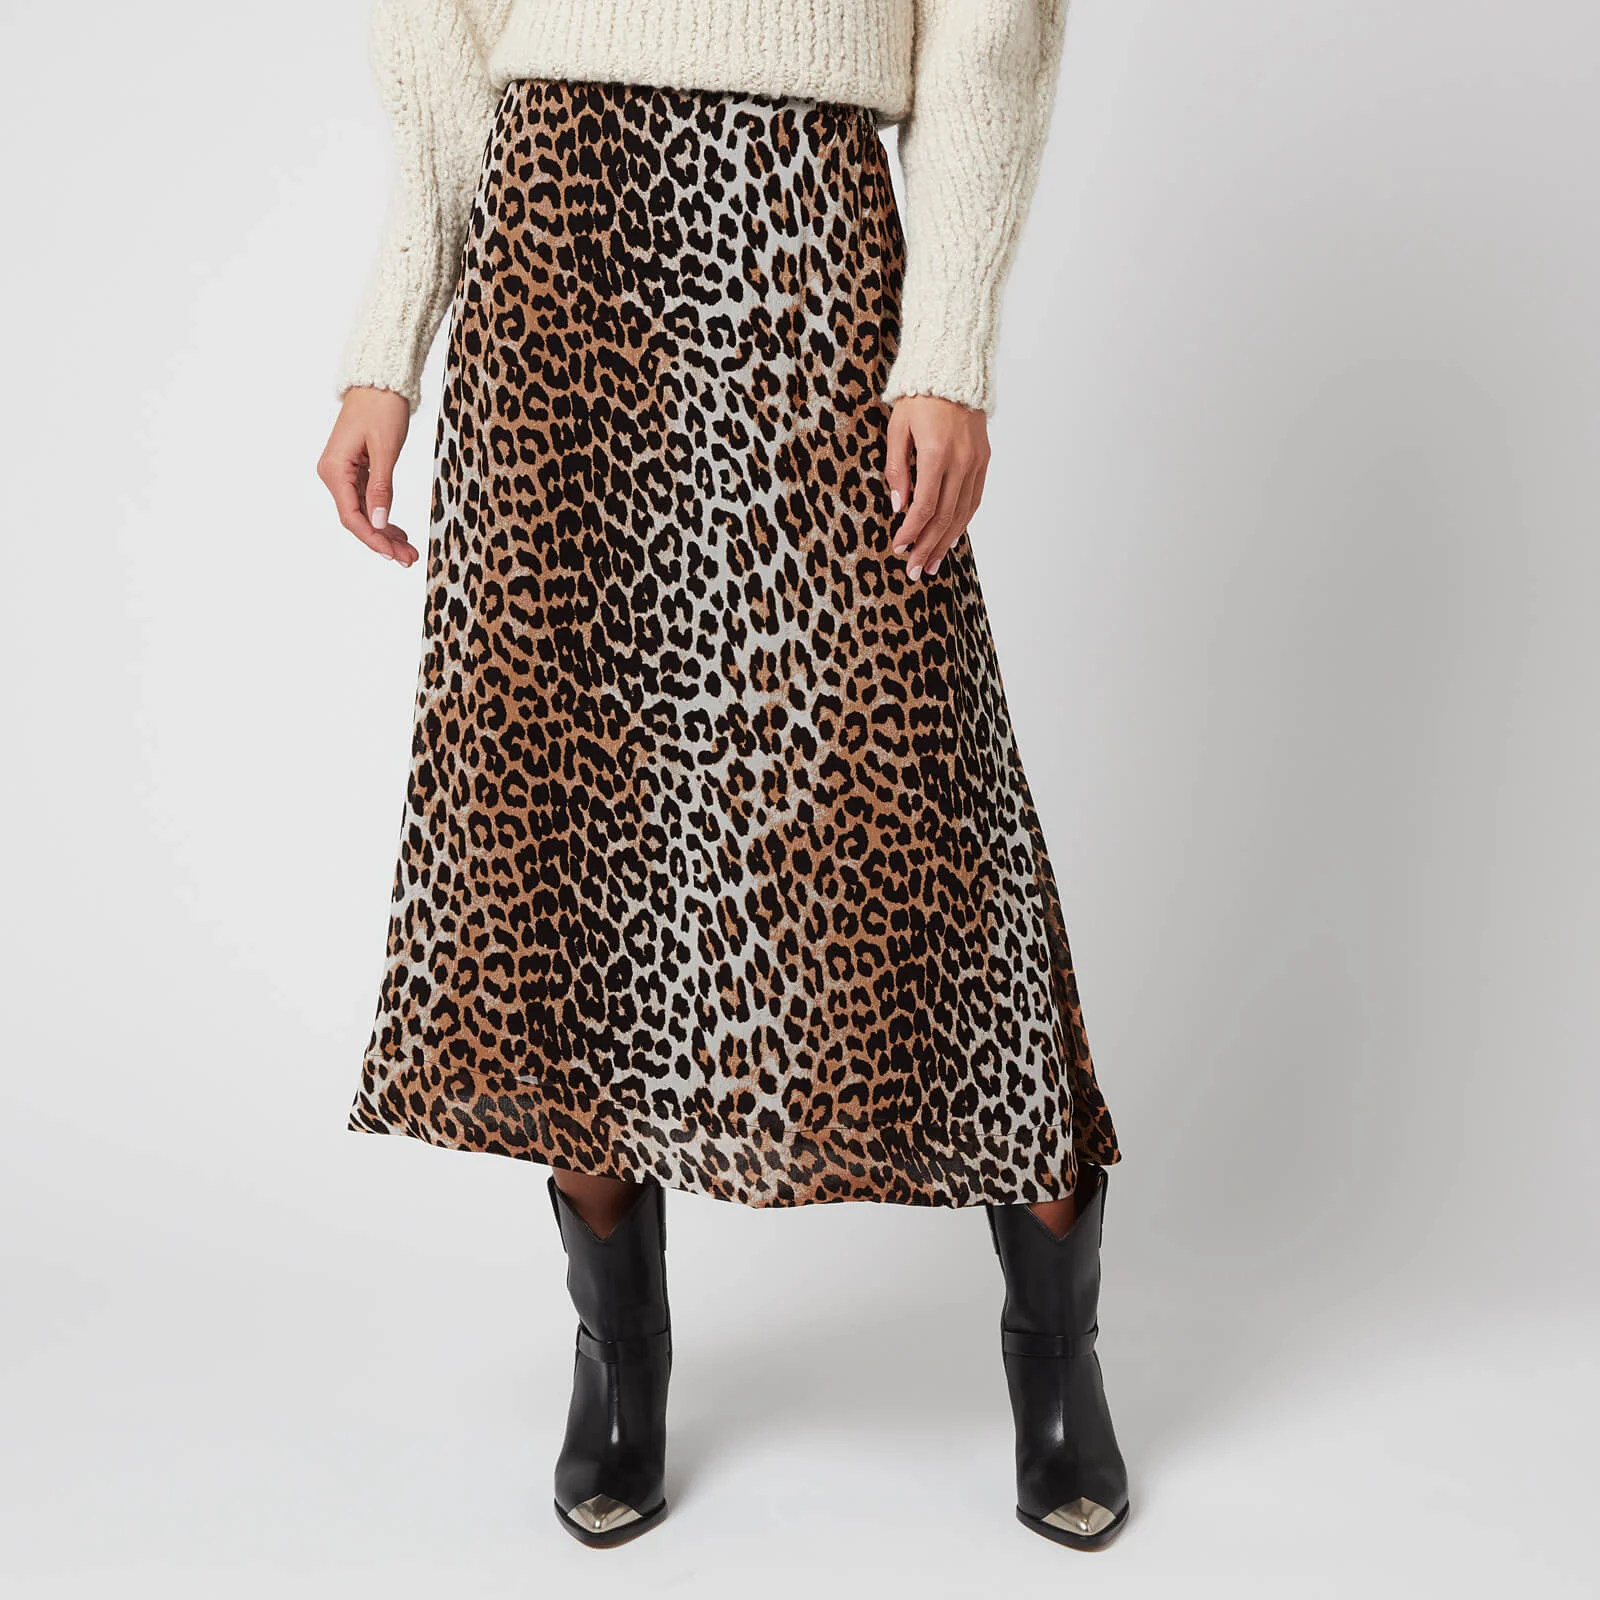 Ganni Women's Printed Georgette Skirt - Leopard Image 1